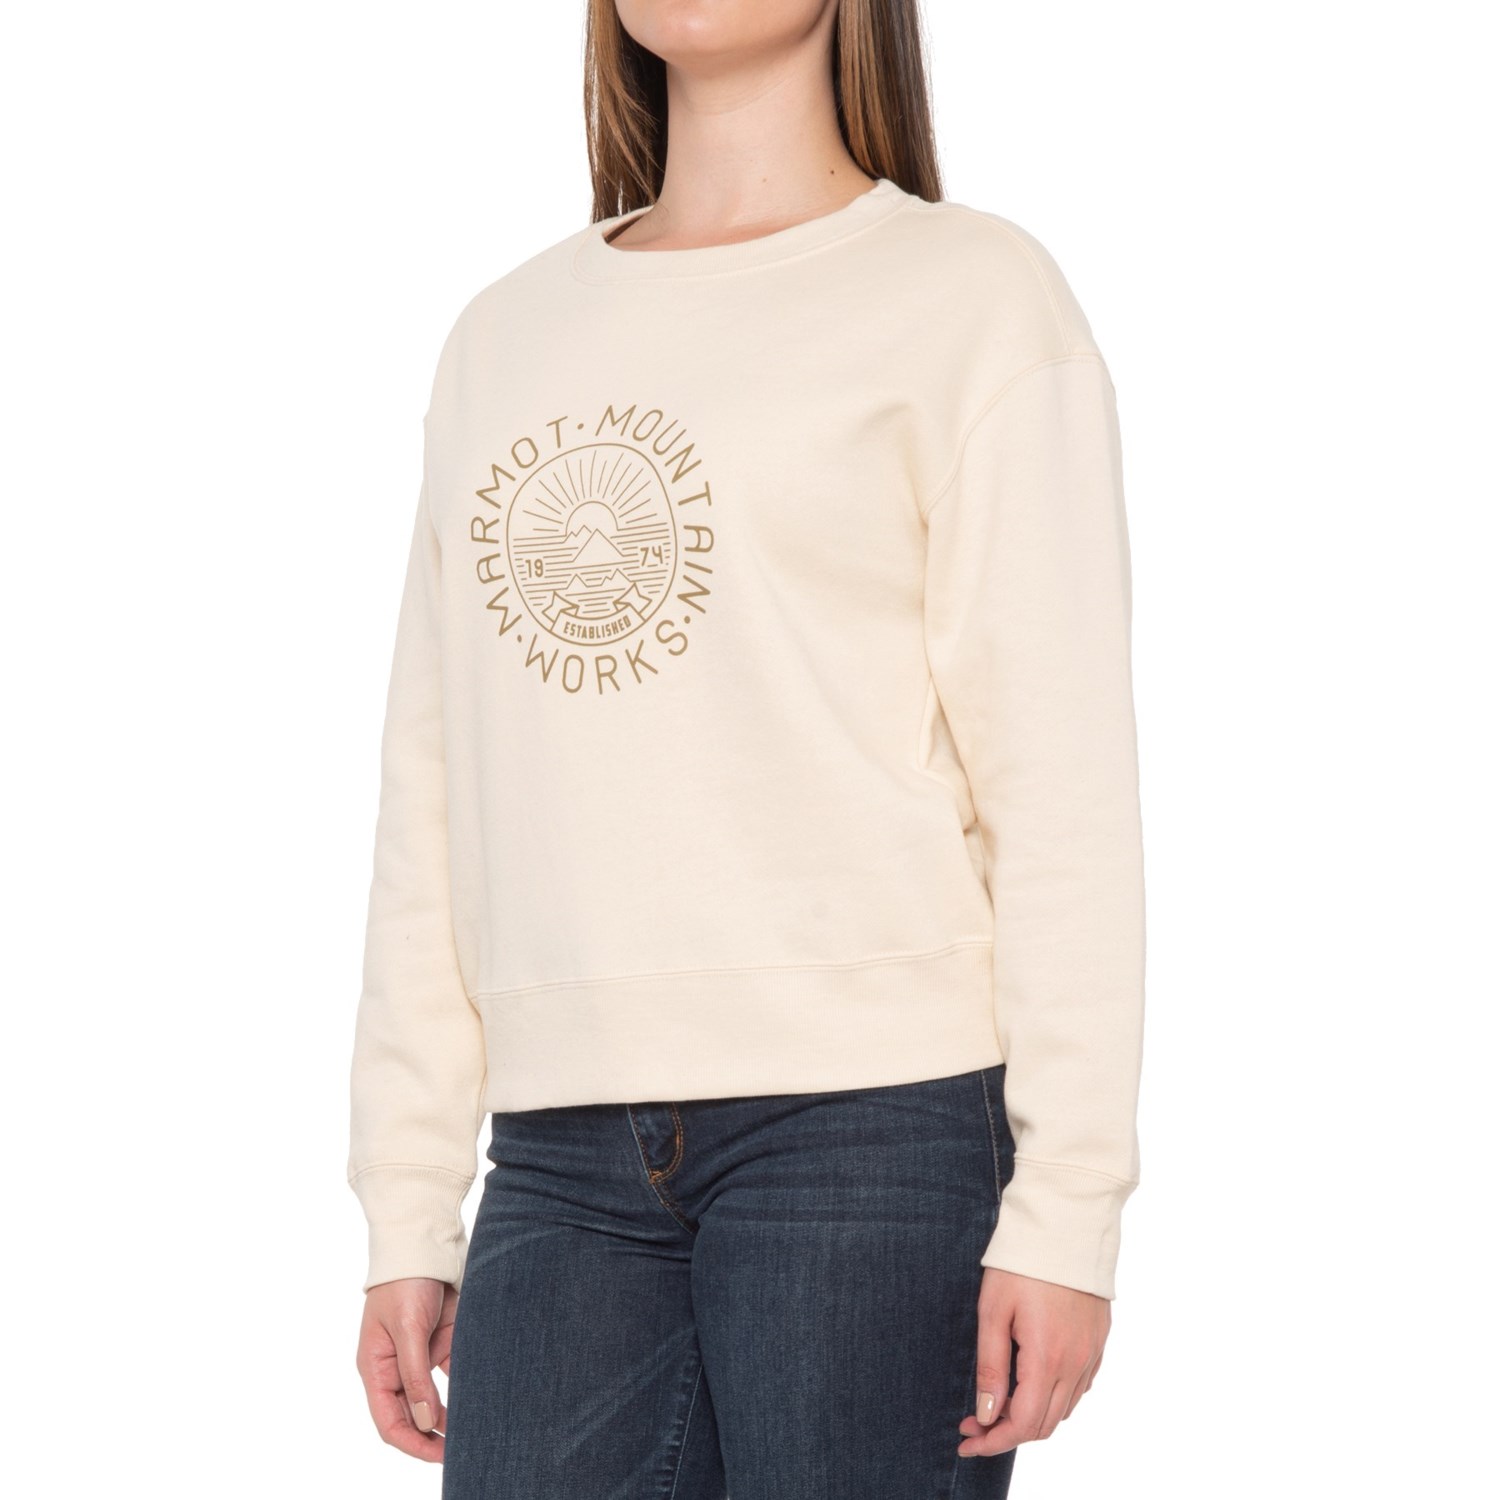 Marmot Mountain Works Sweatshirt (For Women)